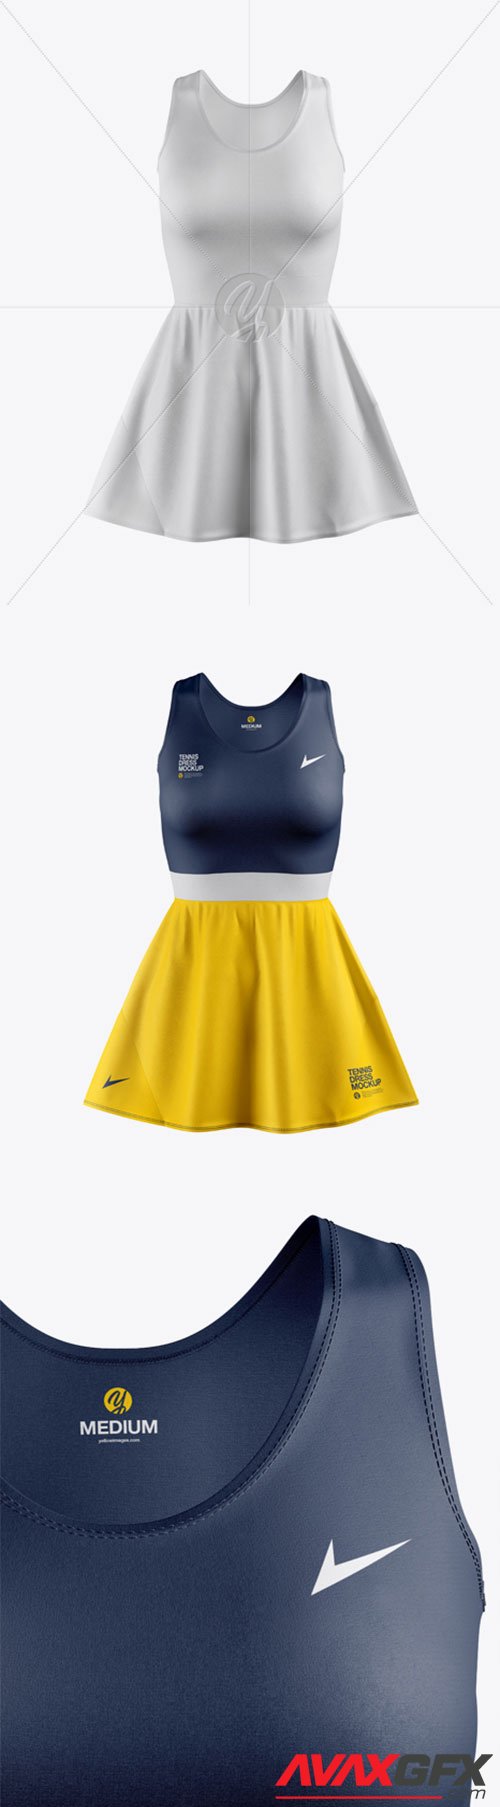 Women’s Tennis Dress Mockup 32099